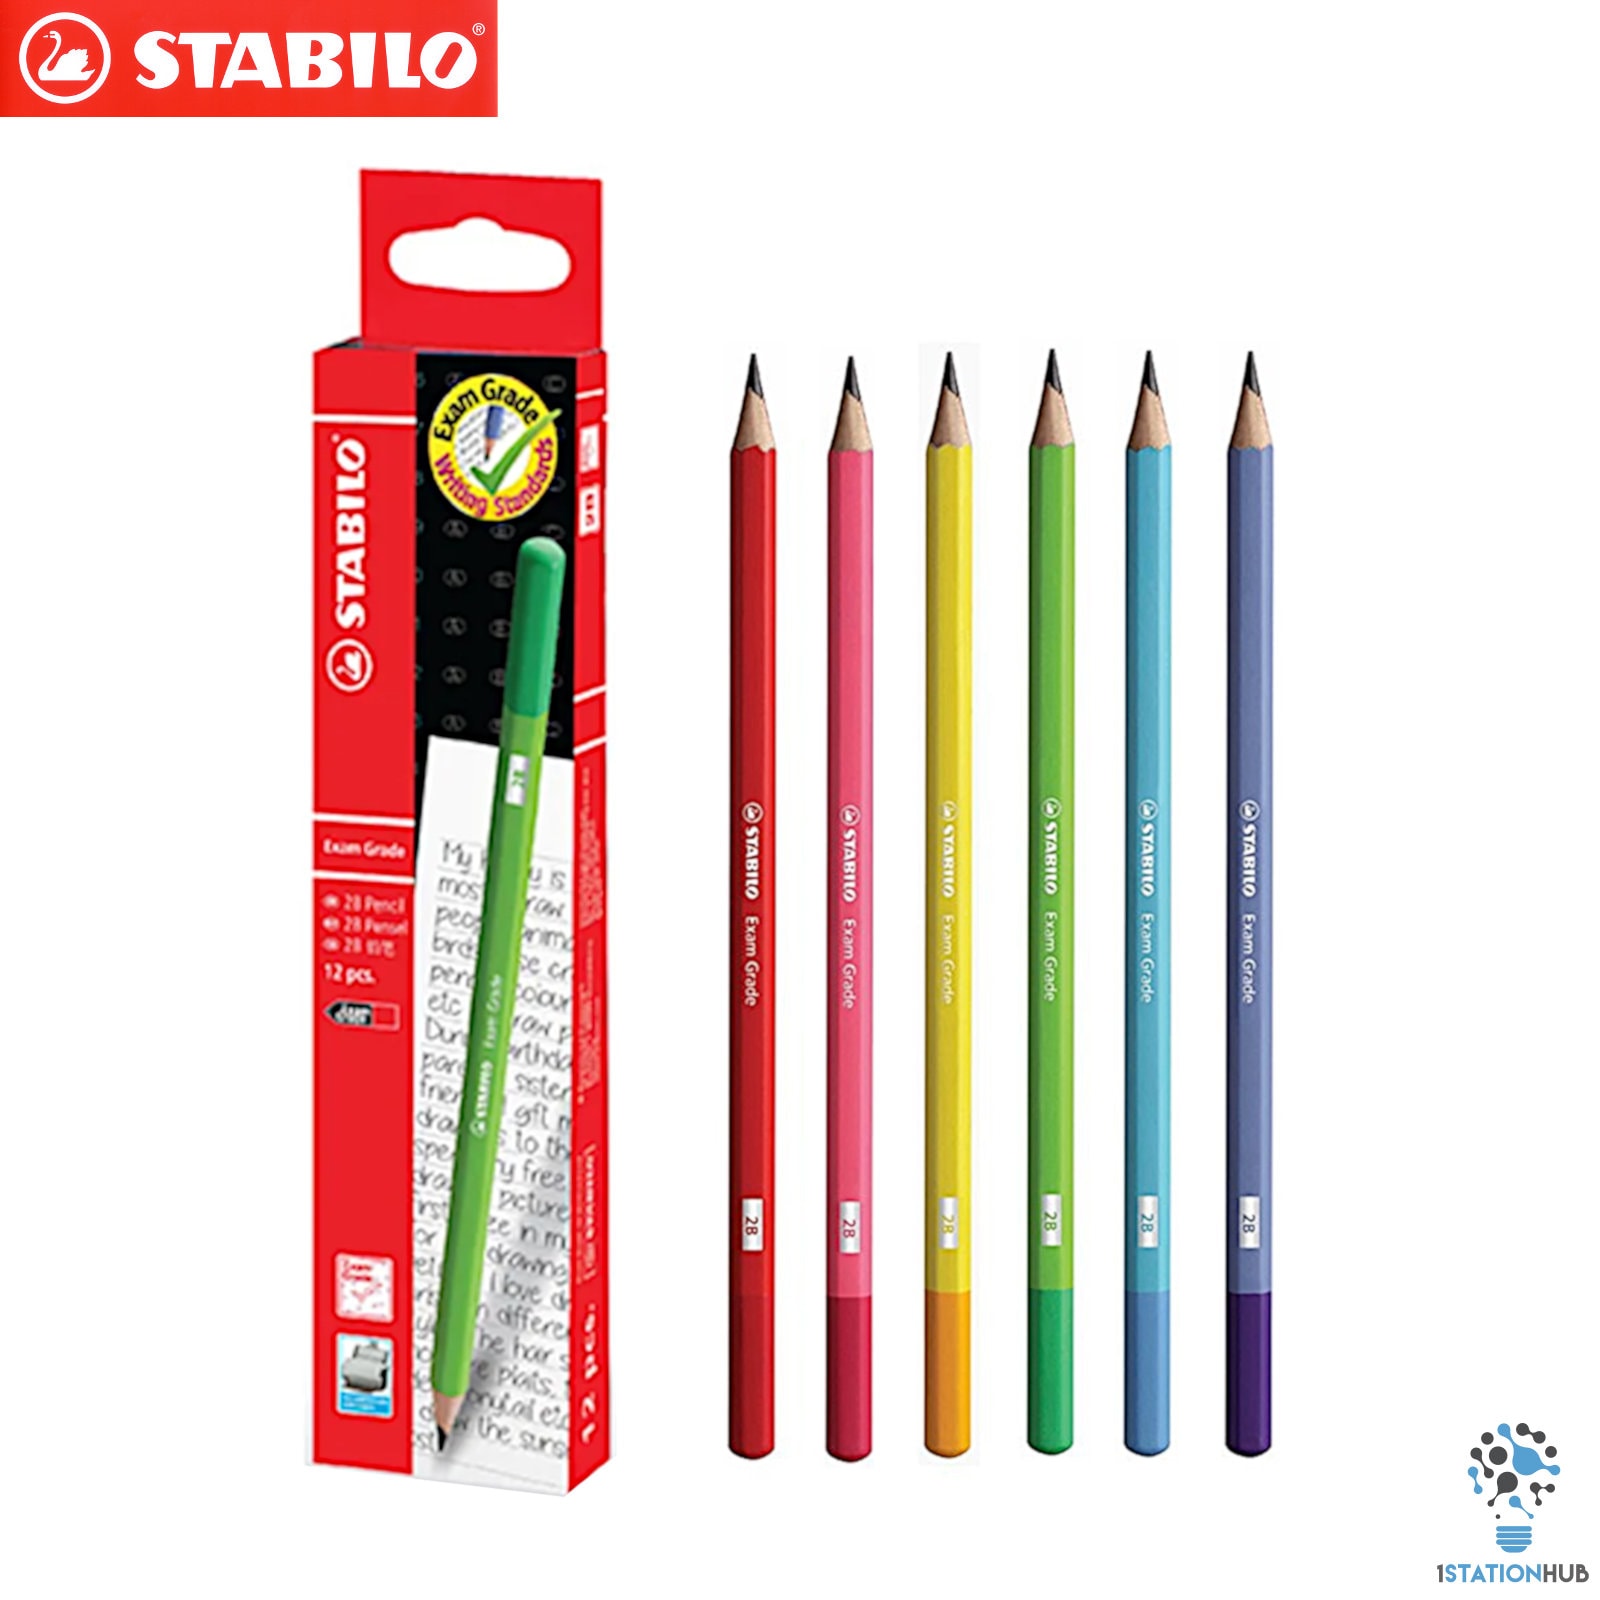 Stabilo Exam Grade 2B Crayon décriture Paquet de 12 crayons